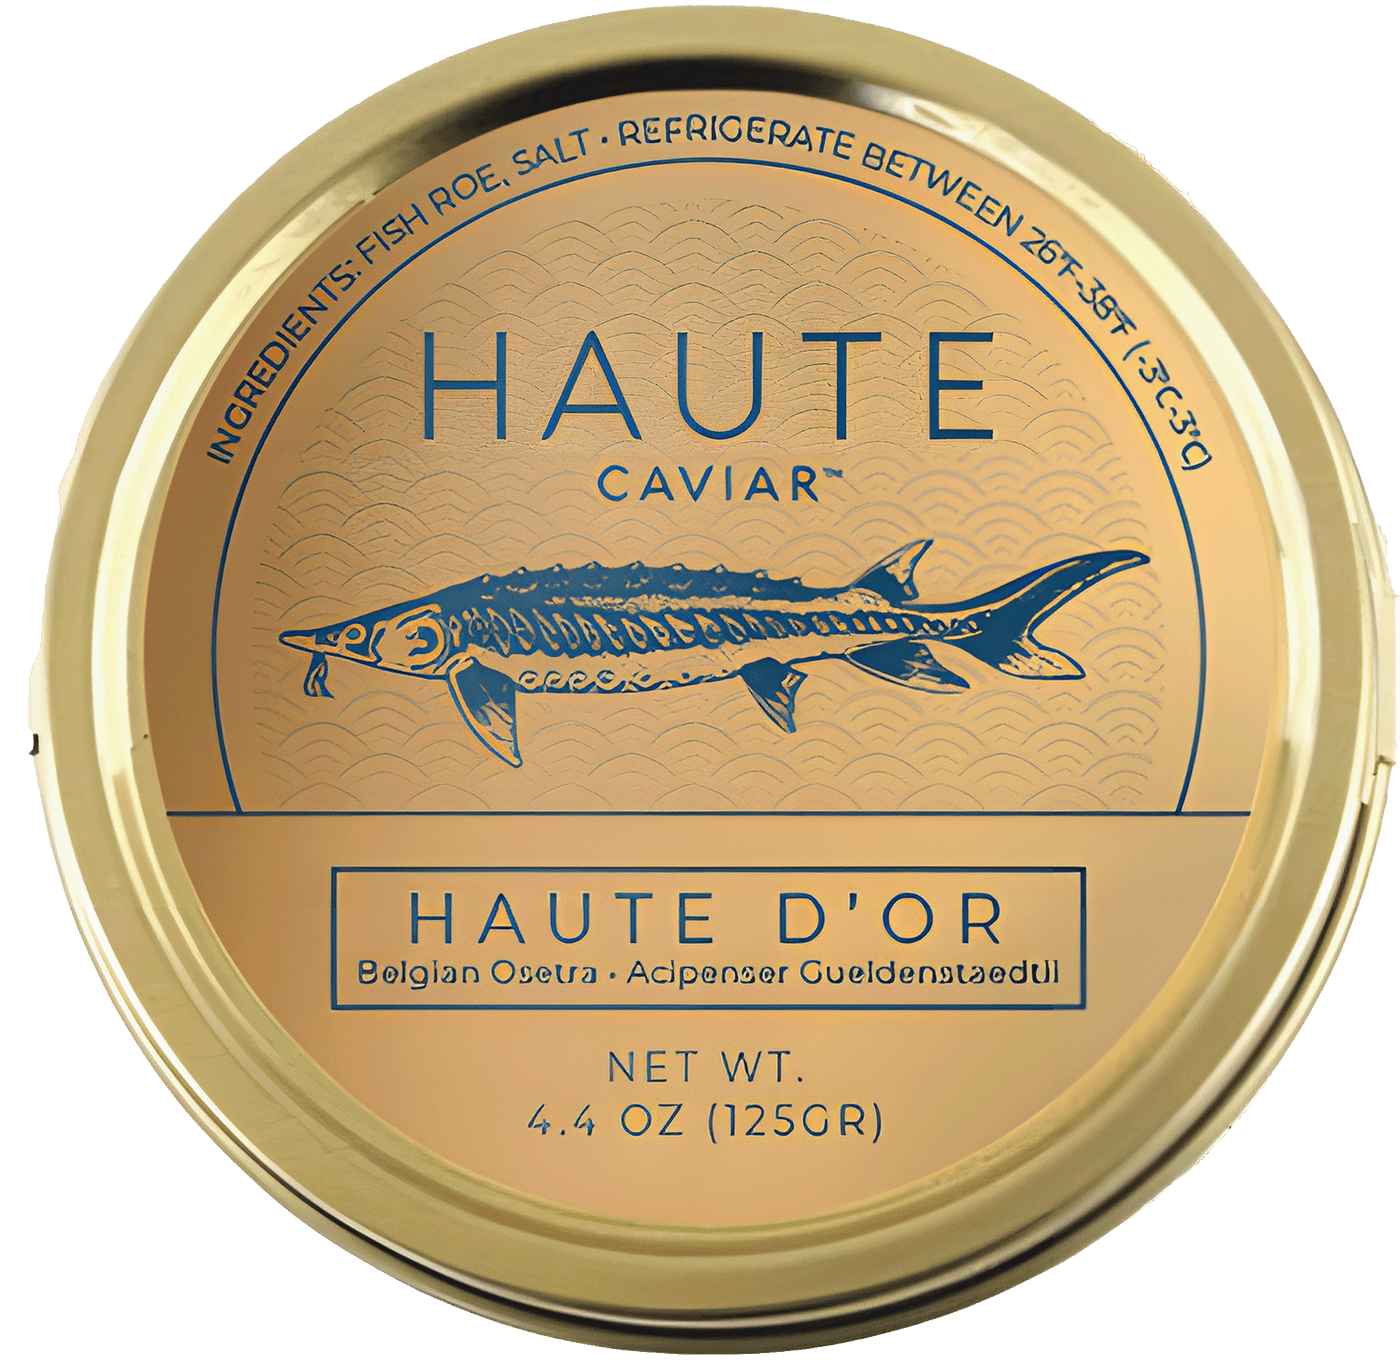 Haute ”O” Caviar Feast - Haute Caviar Company 